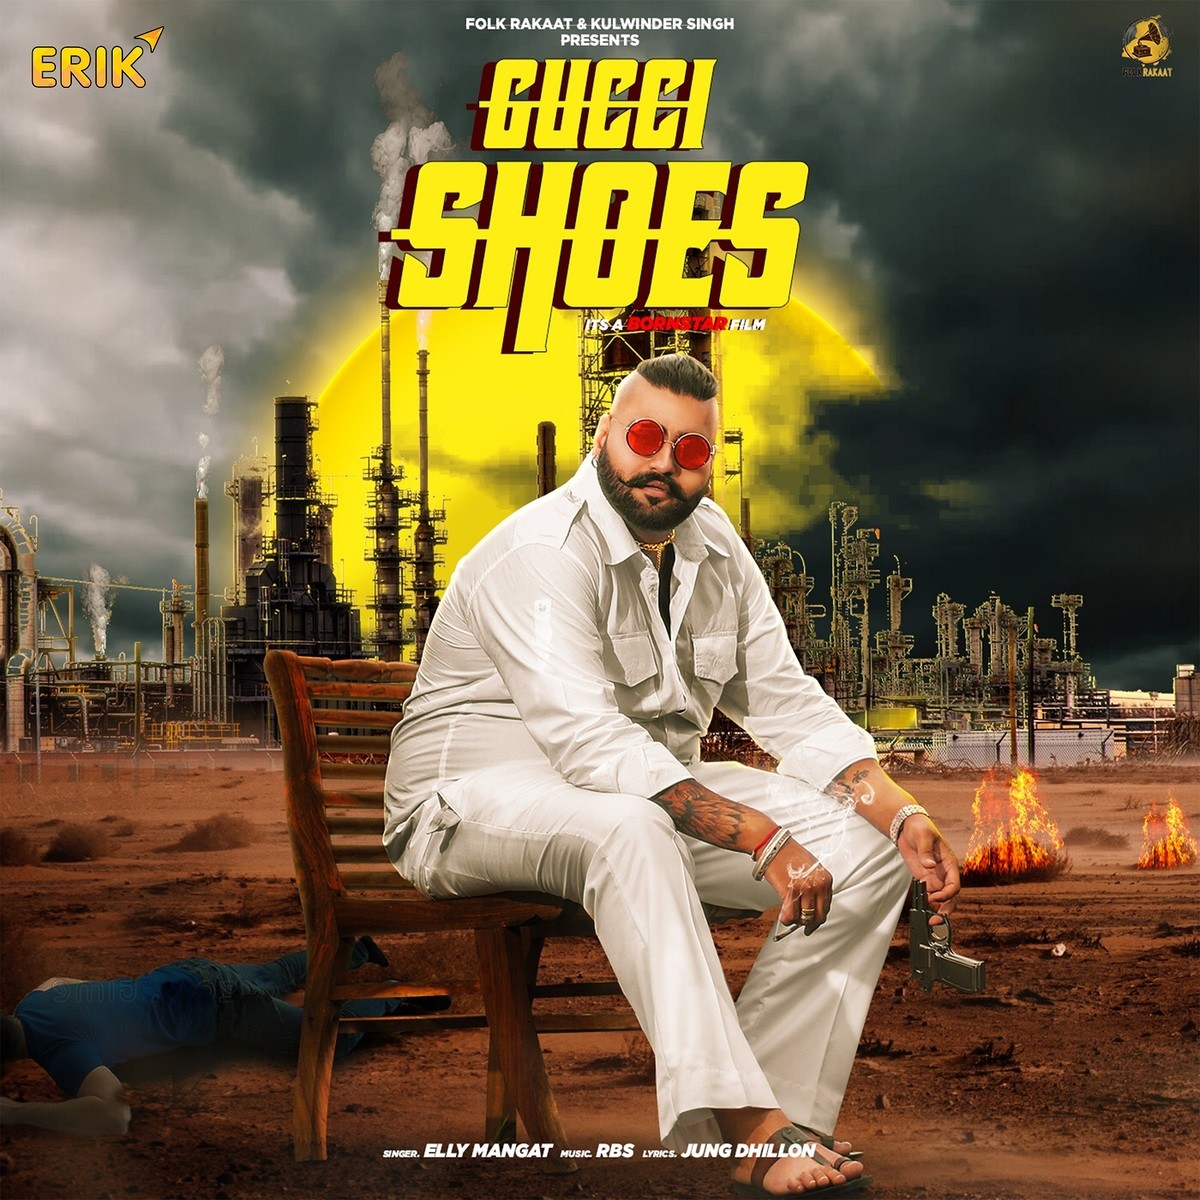 Gucci Shoes MP3 Punjabi Song 